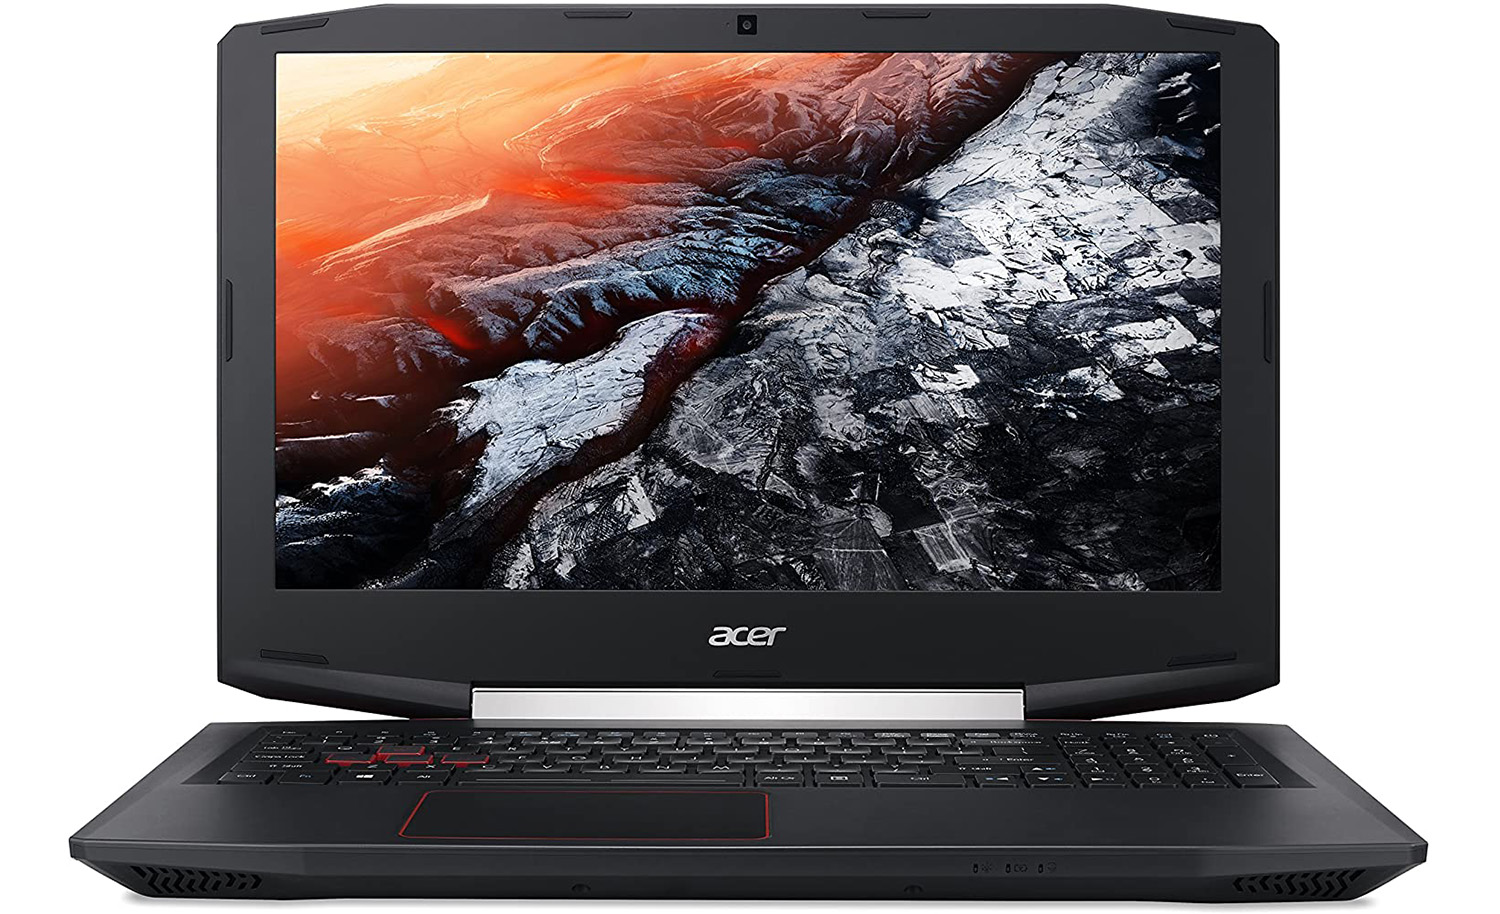 Acer Aspire V15 Intel Core i7 7th Gen 16GB RAM 256GB SSD Windows 10 Home Nvidia GeForce GTX 1050